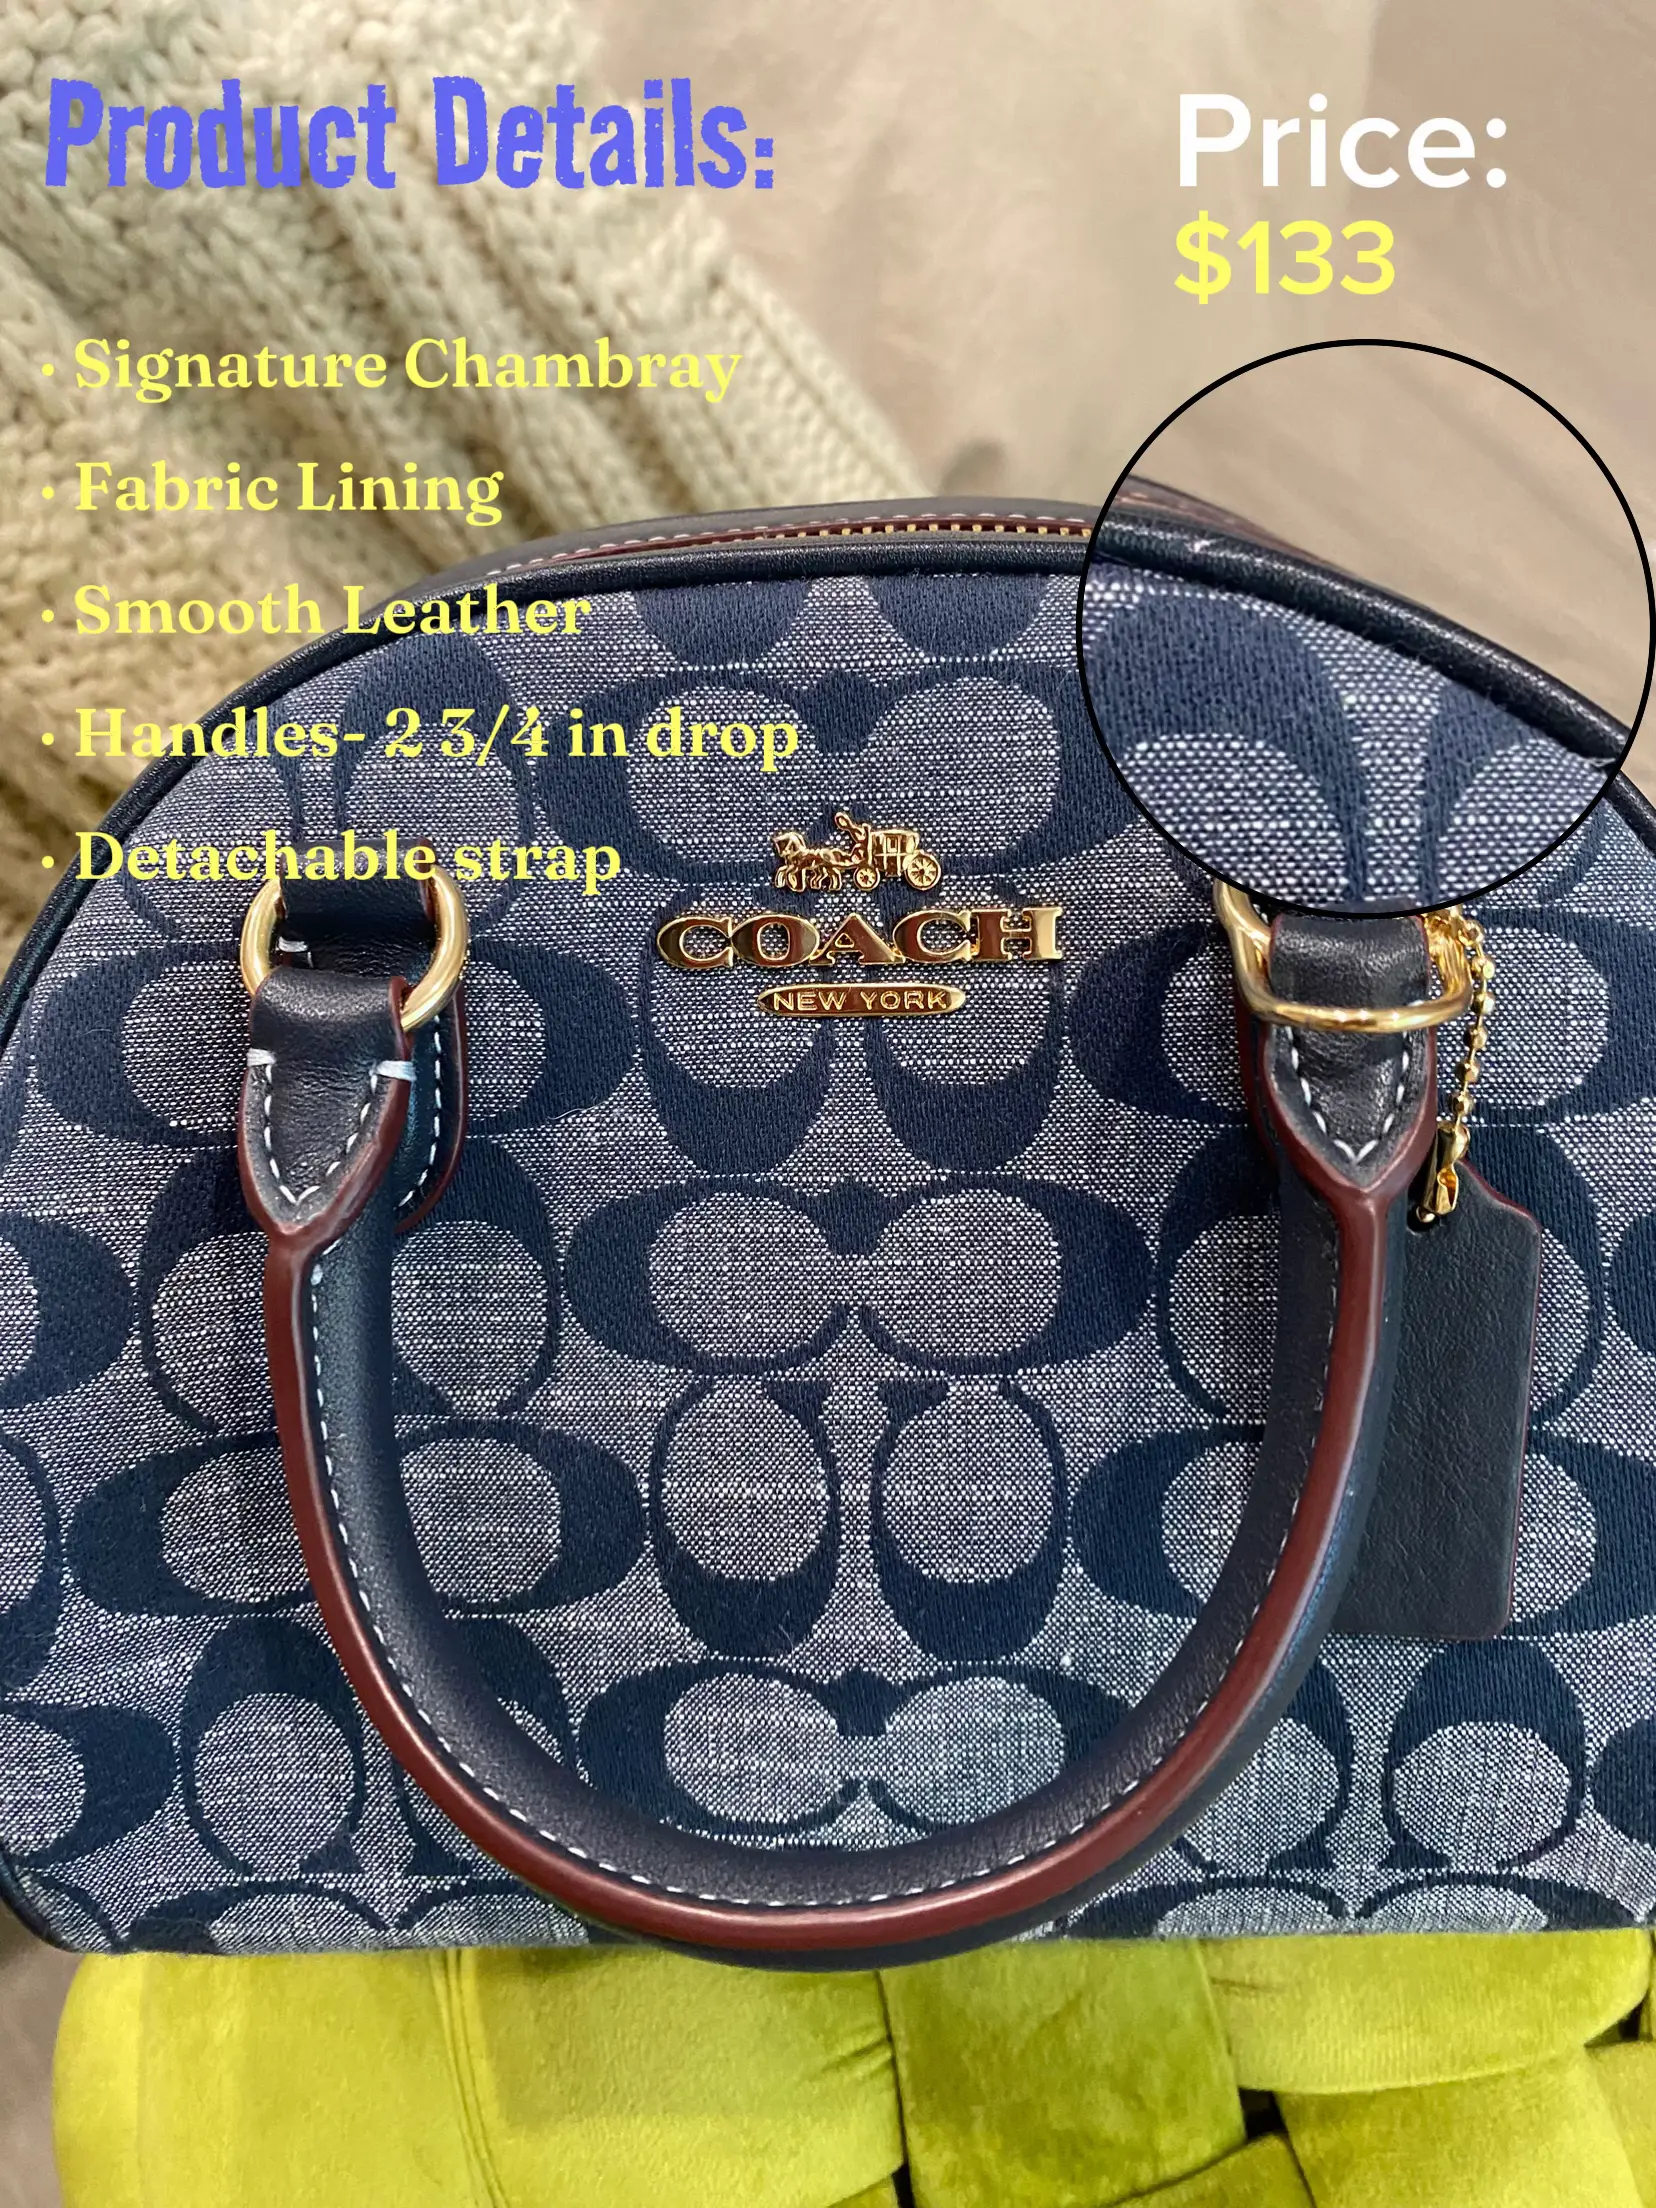 WHAT'S IN MY BAG ~ Coach Mini Sierra Satchel in PINK